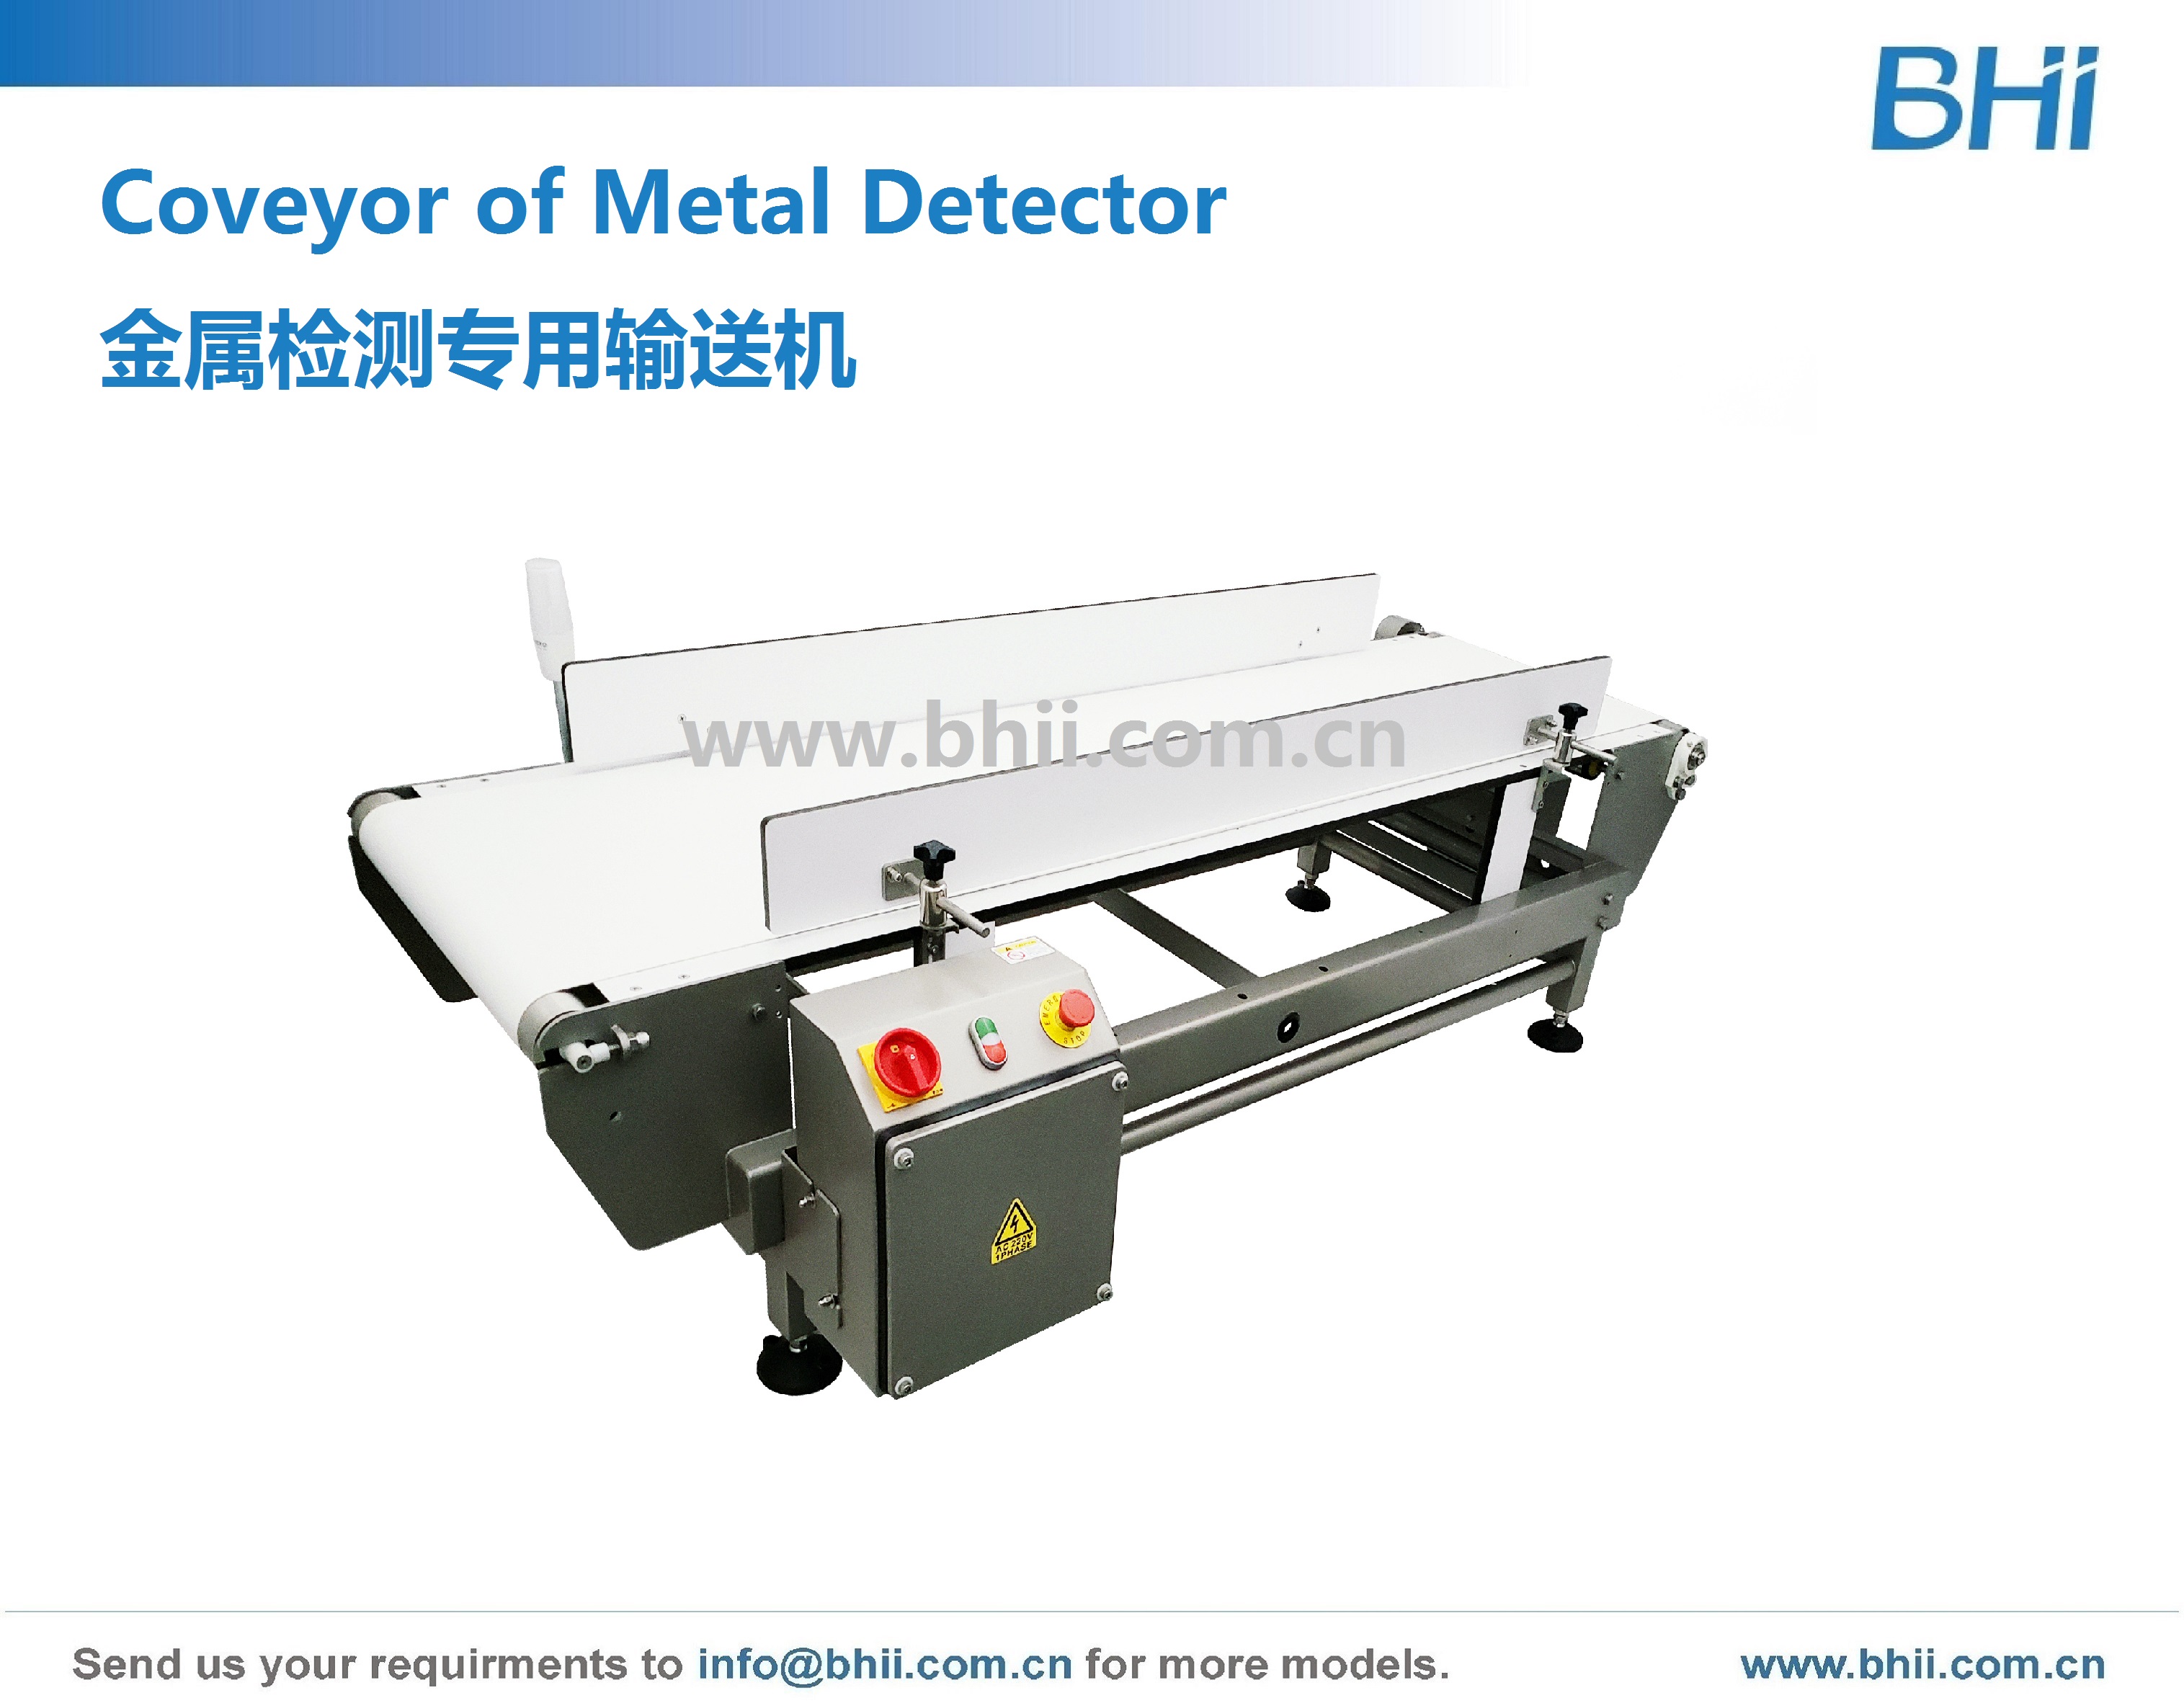 Conveyor for Metal Detector